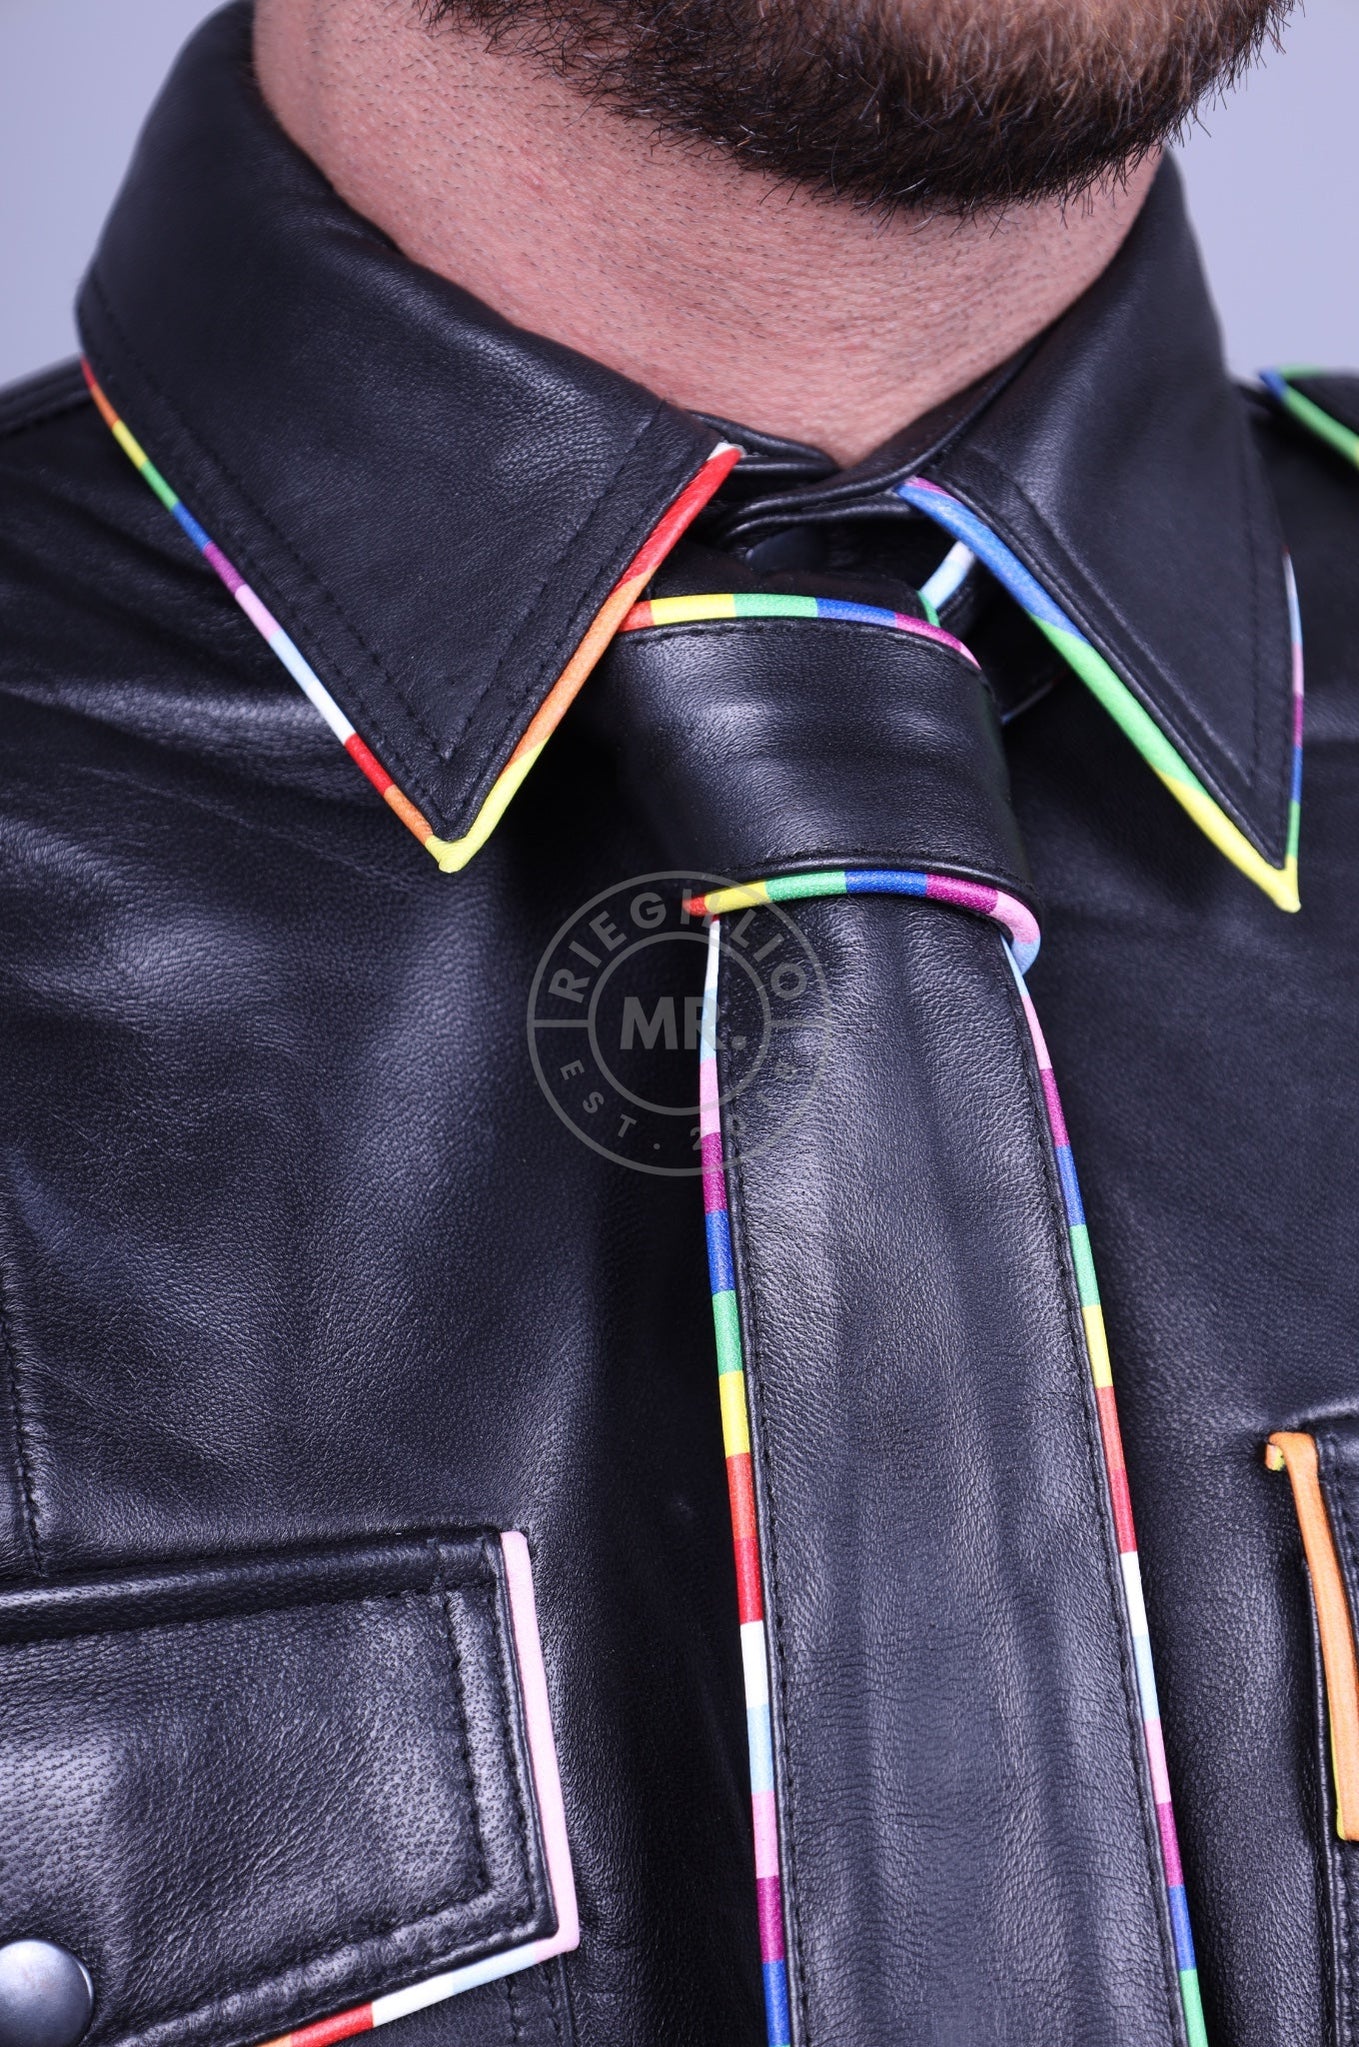 Black Leather Tie - PROUD Piping at MR. Riegillio